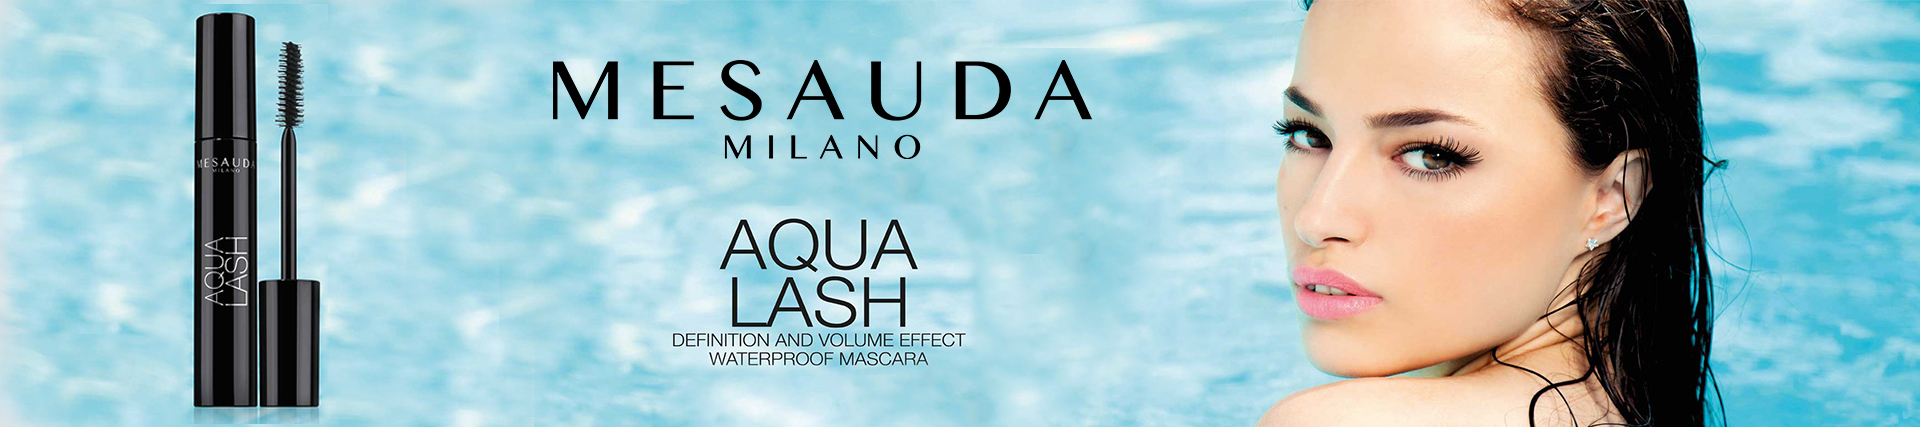 Mesauda Milano Mascara Aqua Lash Definition and Volume Waterproof